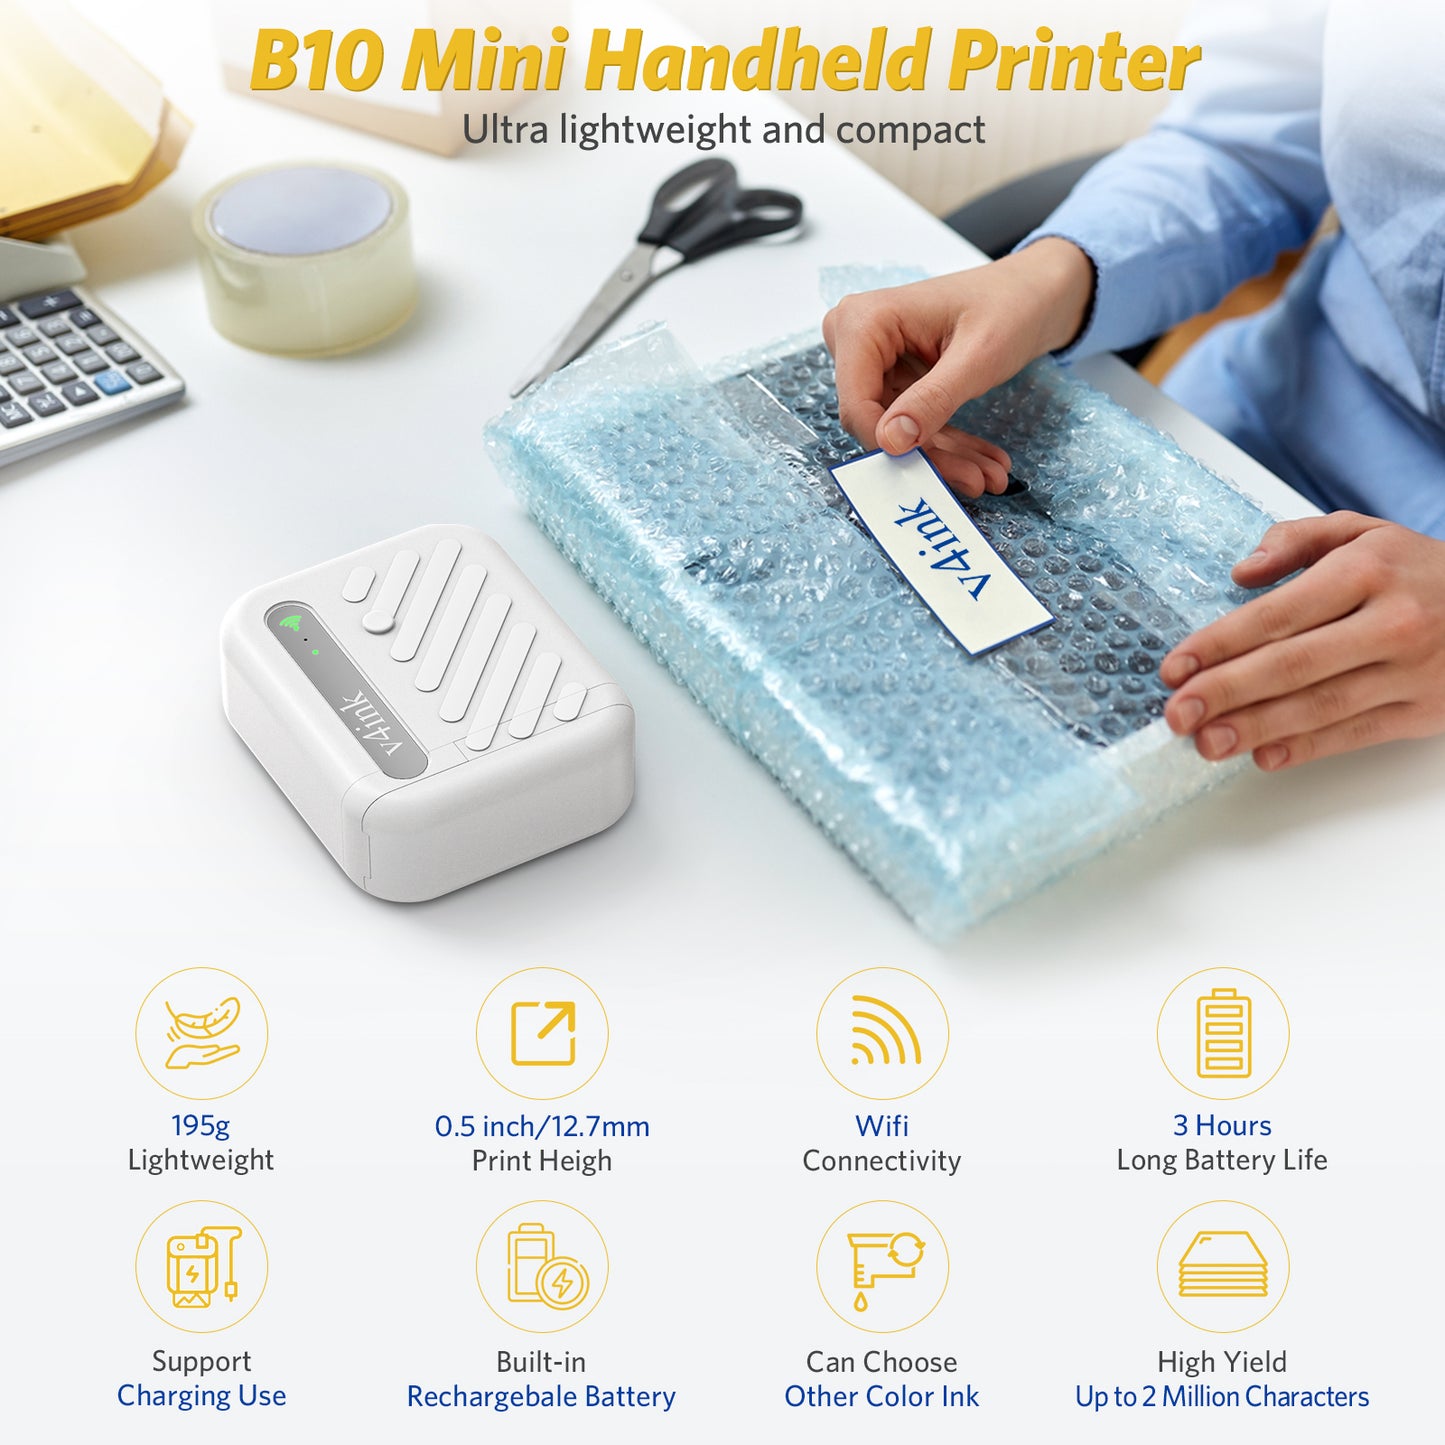 Key features of B10 mini portable inkjet printer